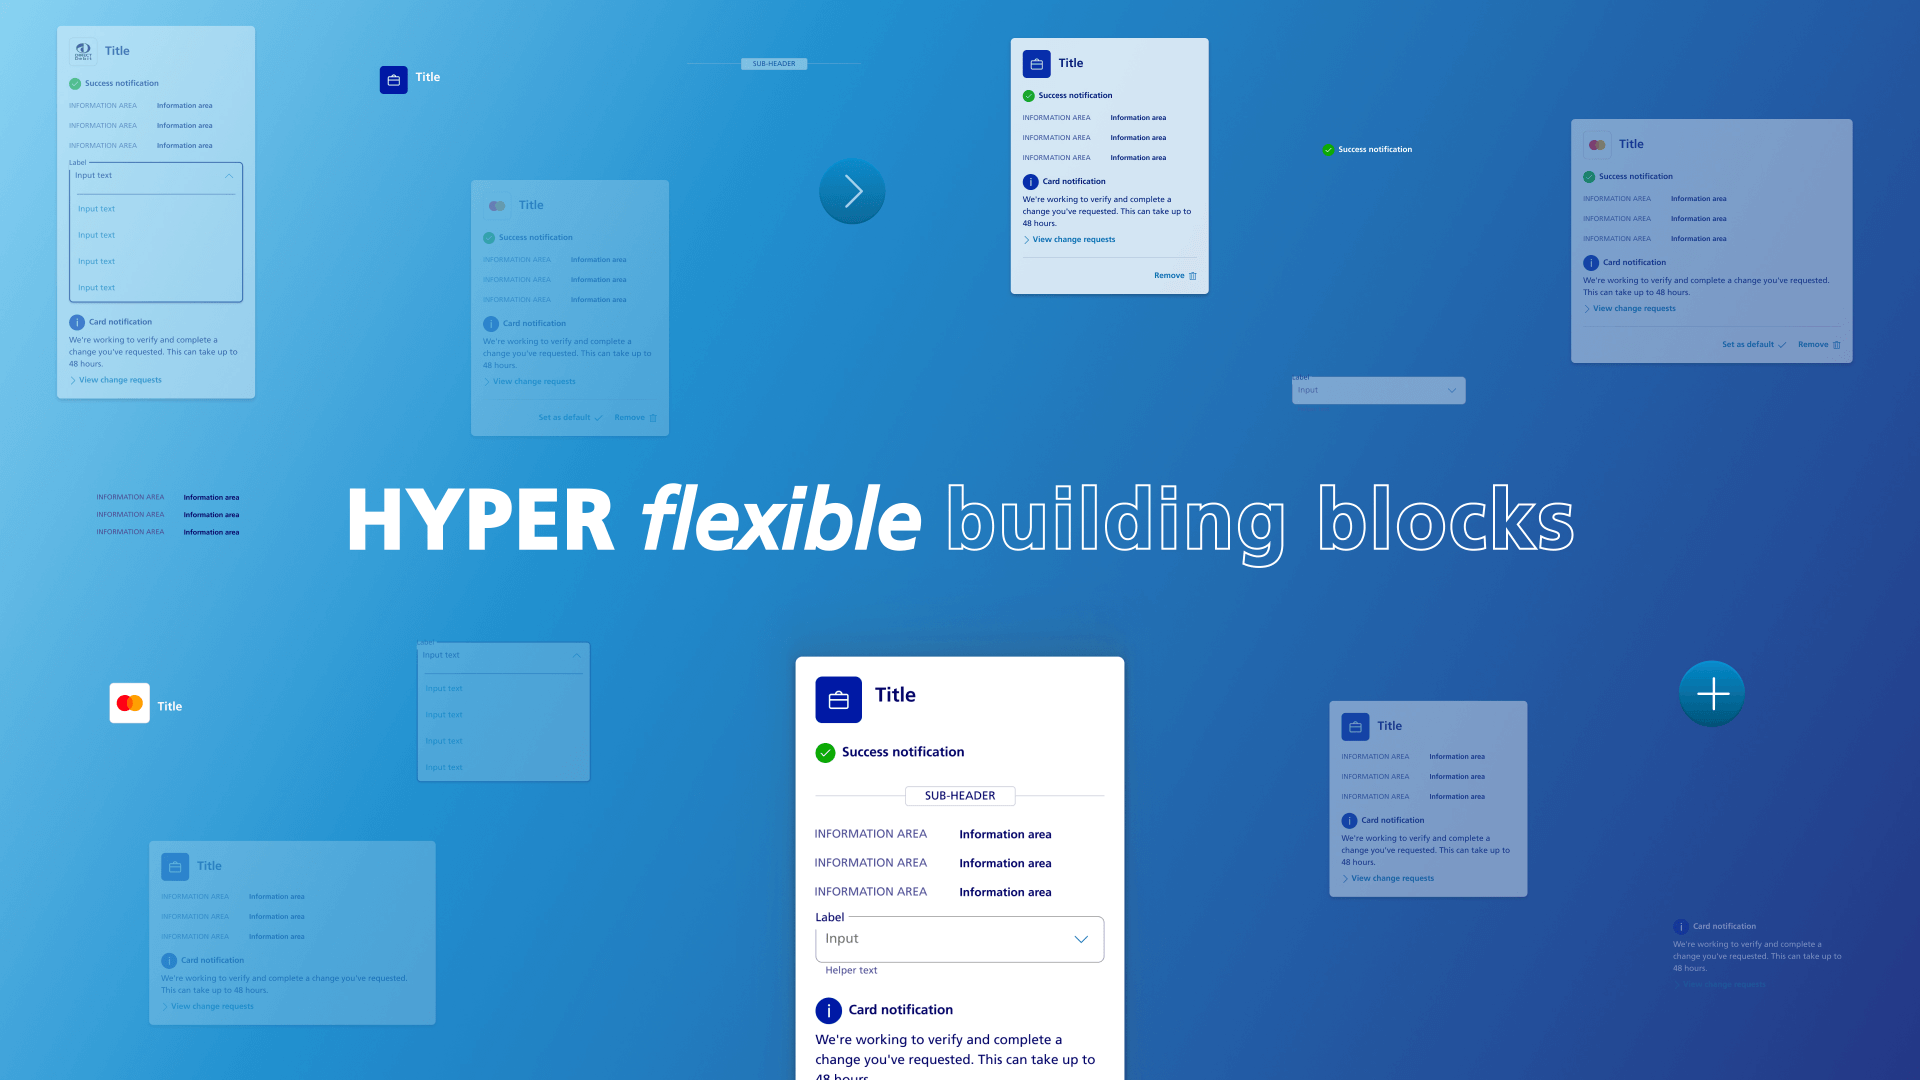 Hyper flexible building blocks